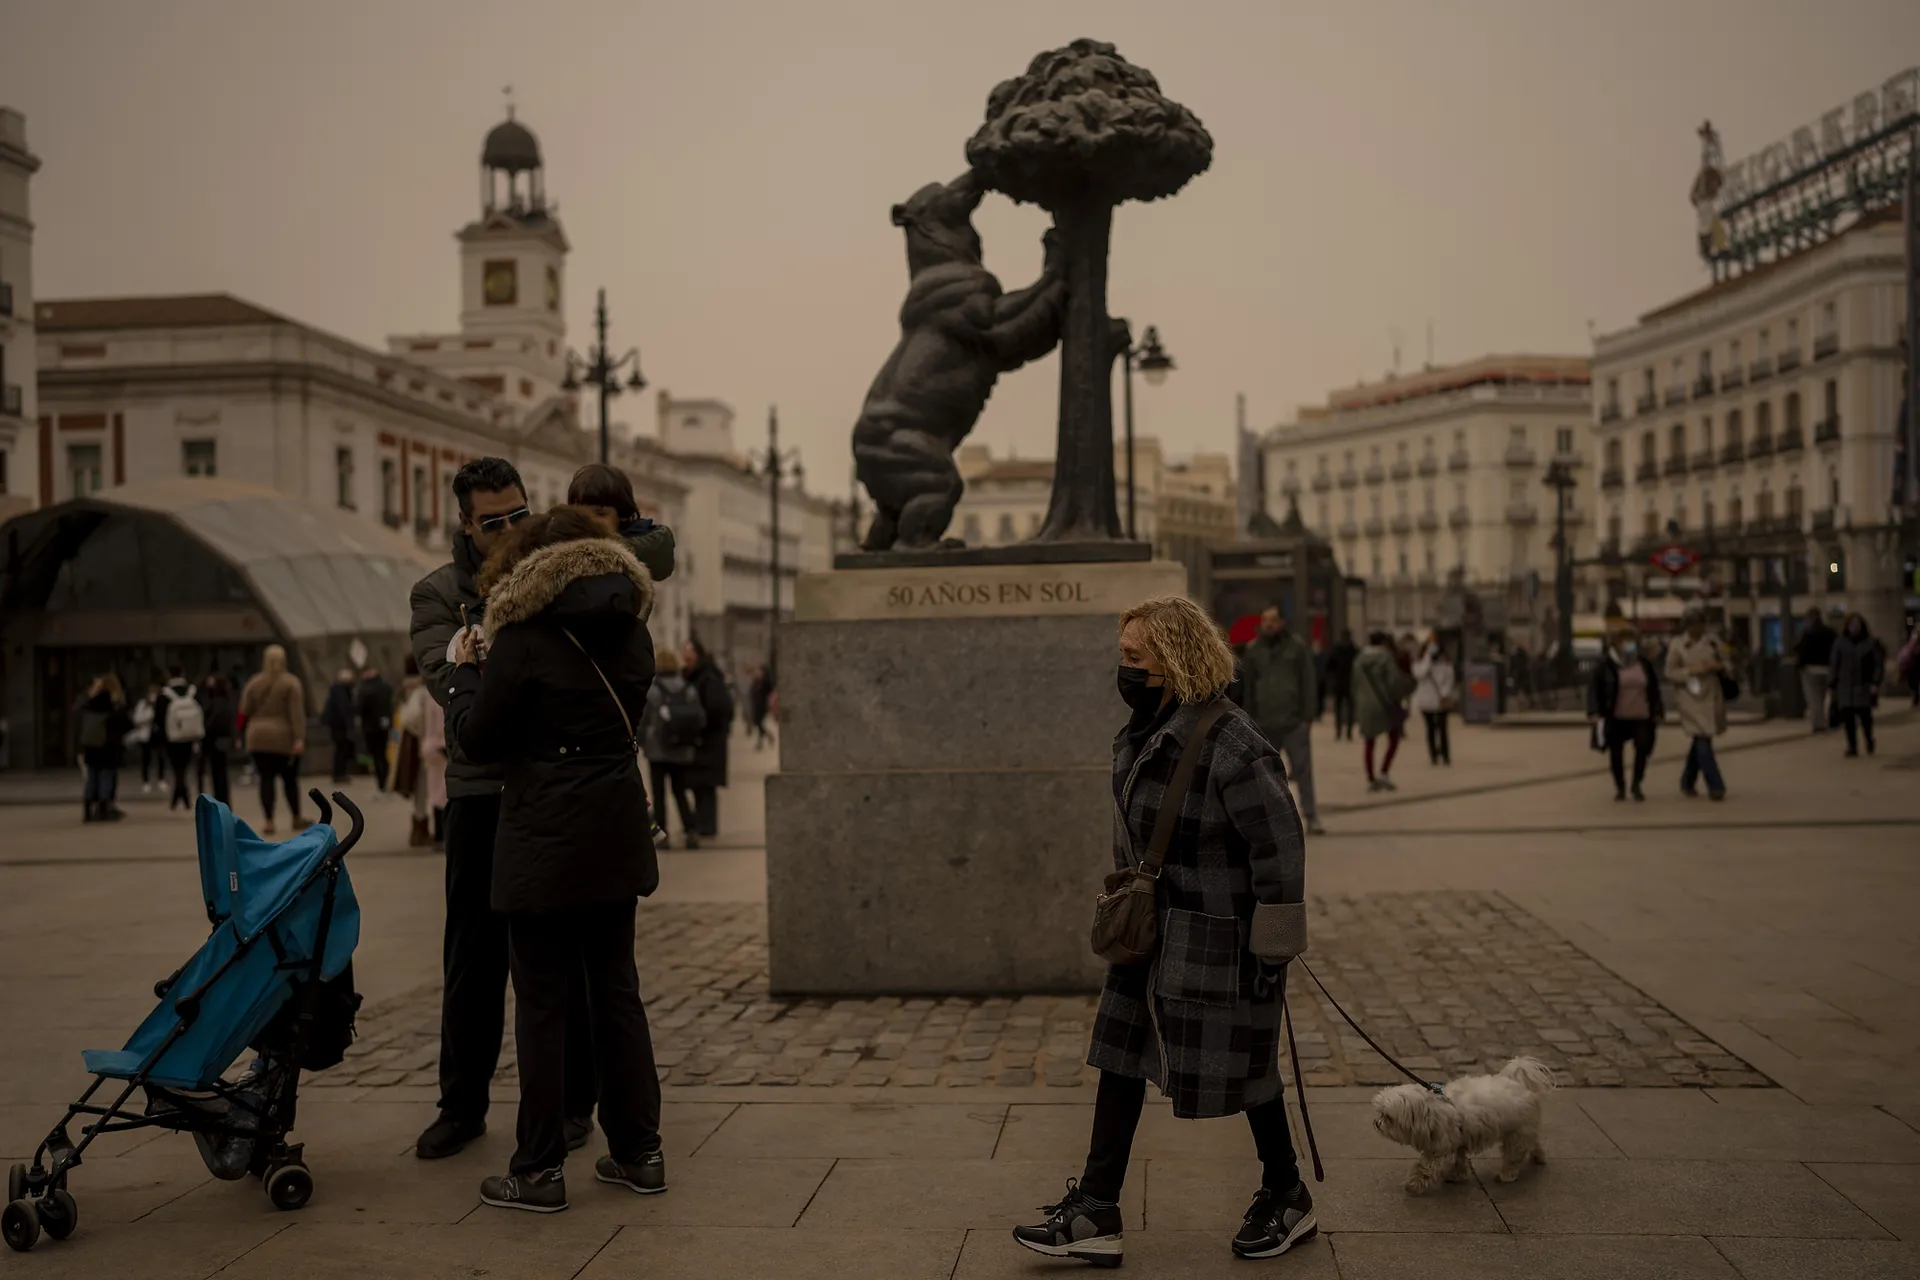 Puerta del Sol, in the center of Madrid